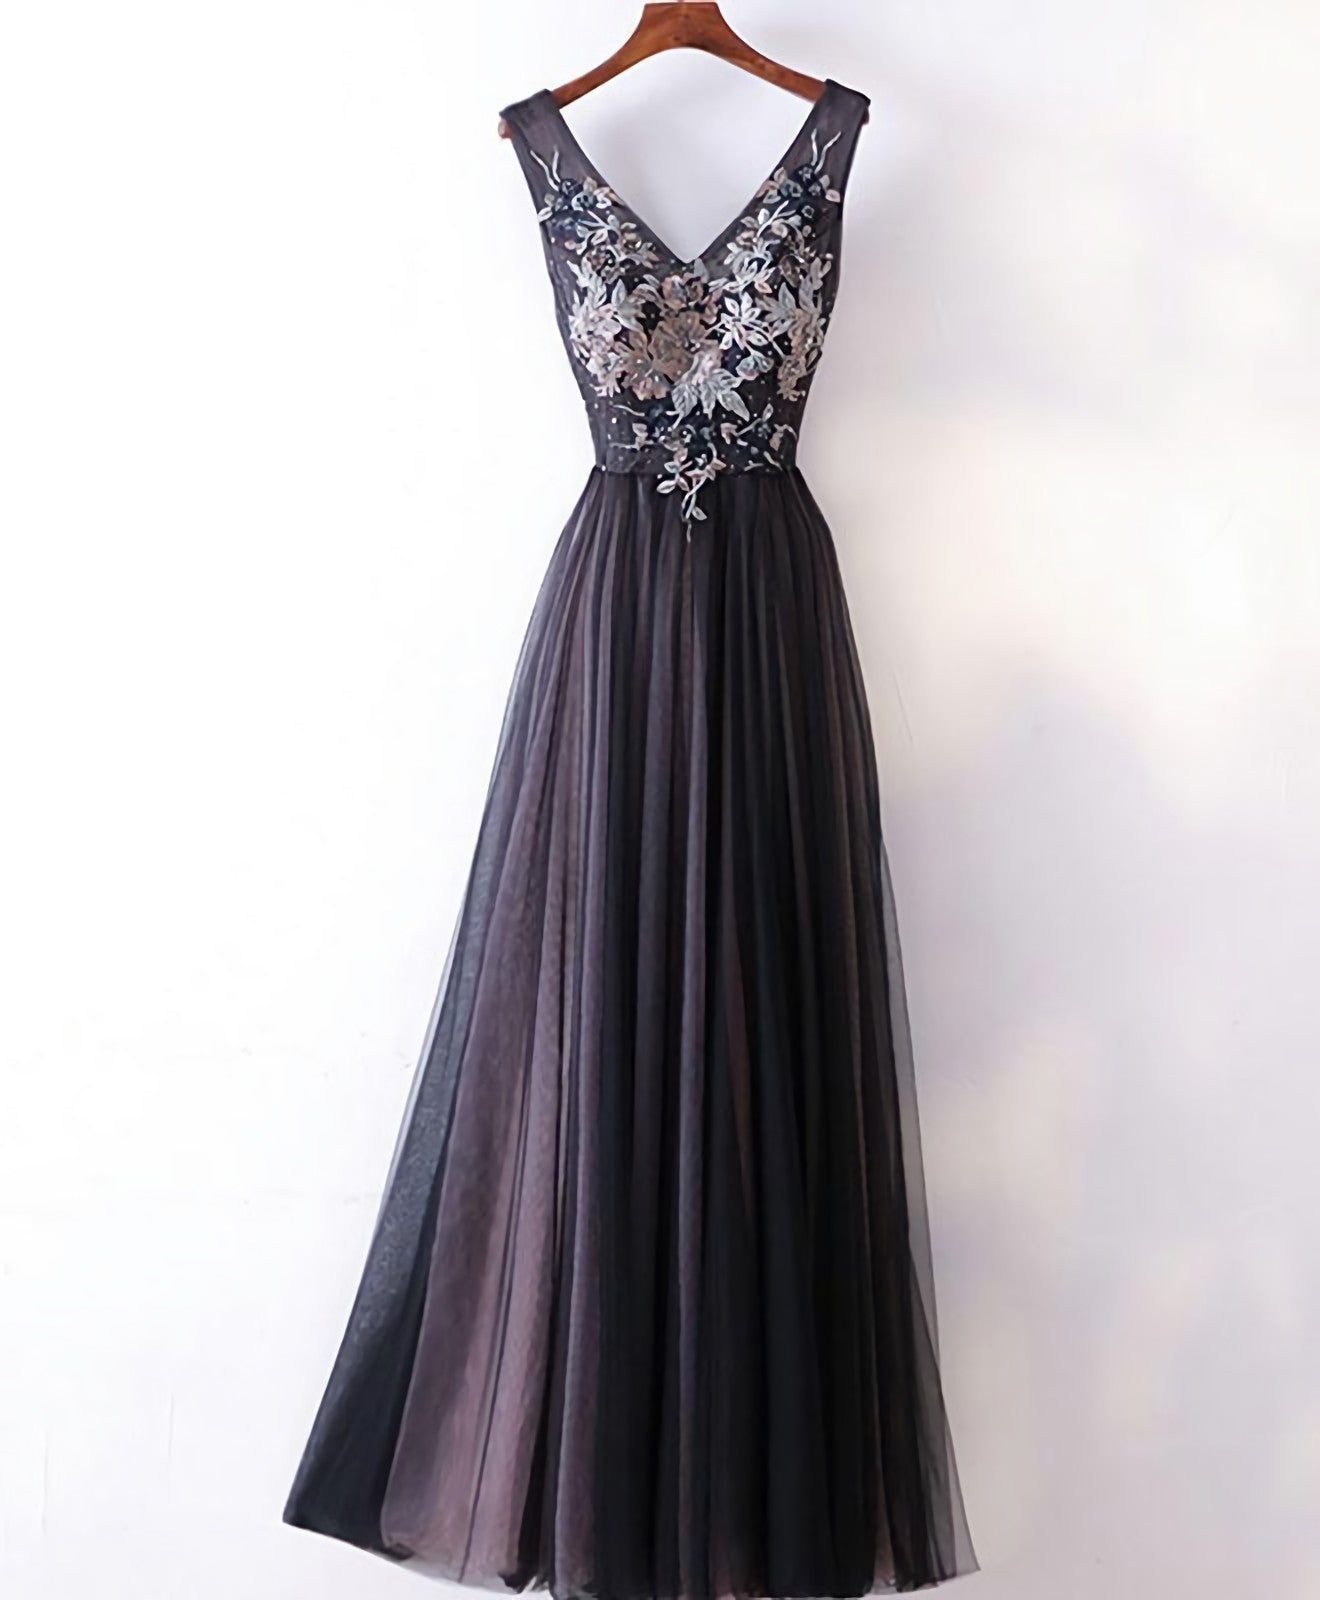 Black V Neck Lace Applique Tulle Long Corset Prom Dress, Black Evening Dress outfit, Prom Dress Shop